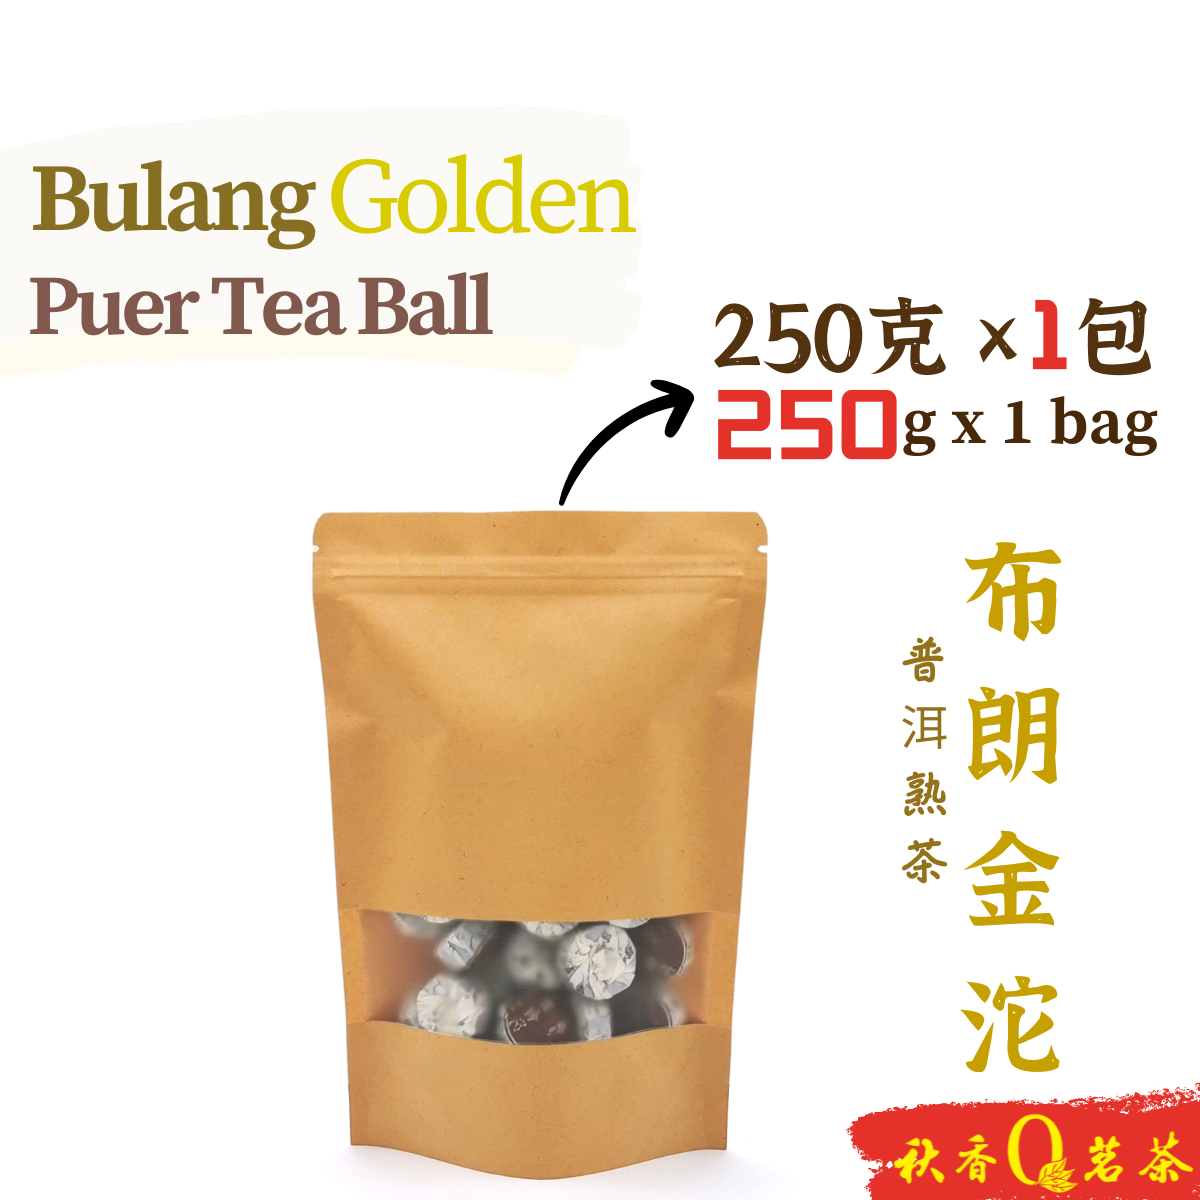 布朗金沱 BuLang Golden Puer Tea Ball 【250g】 |【普洱熟茶 Ripe Puer tea】